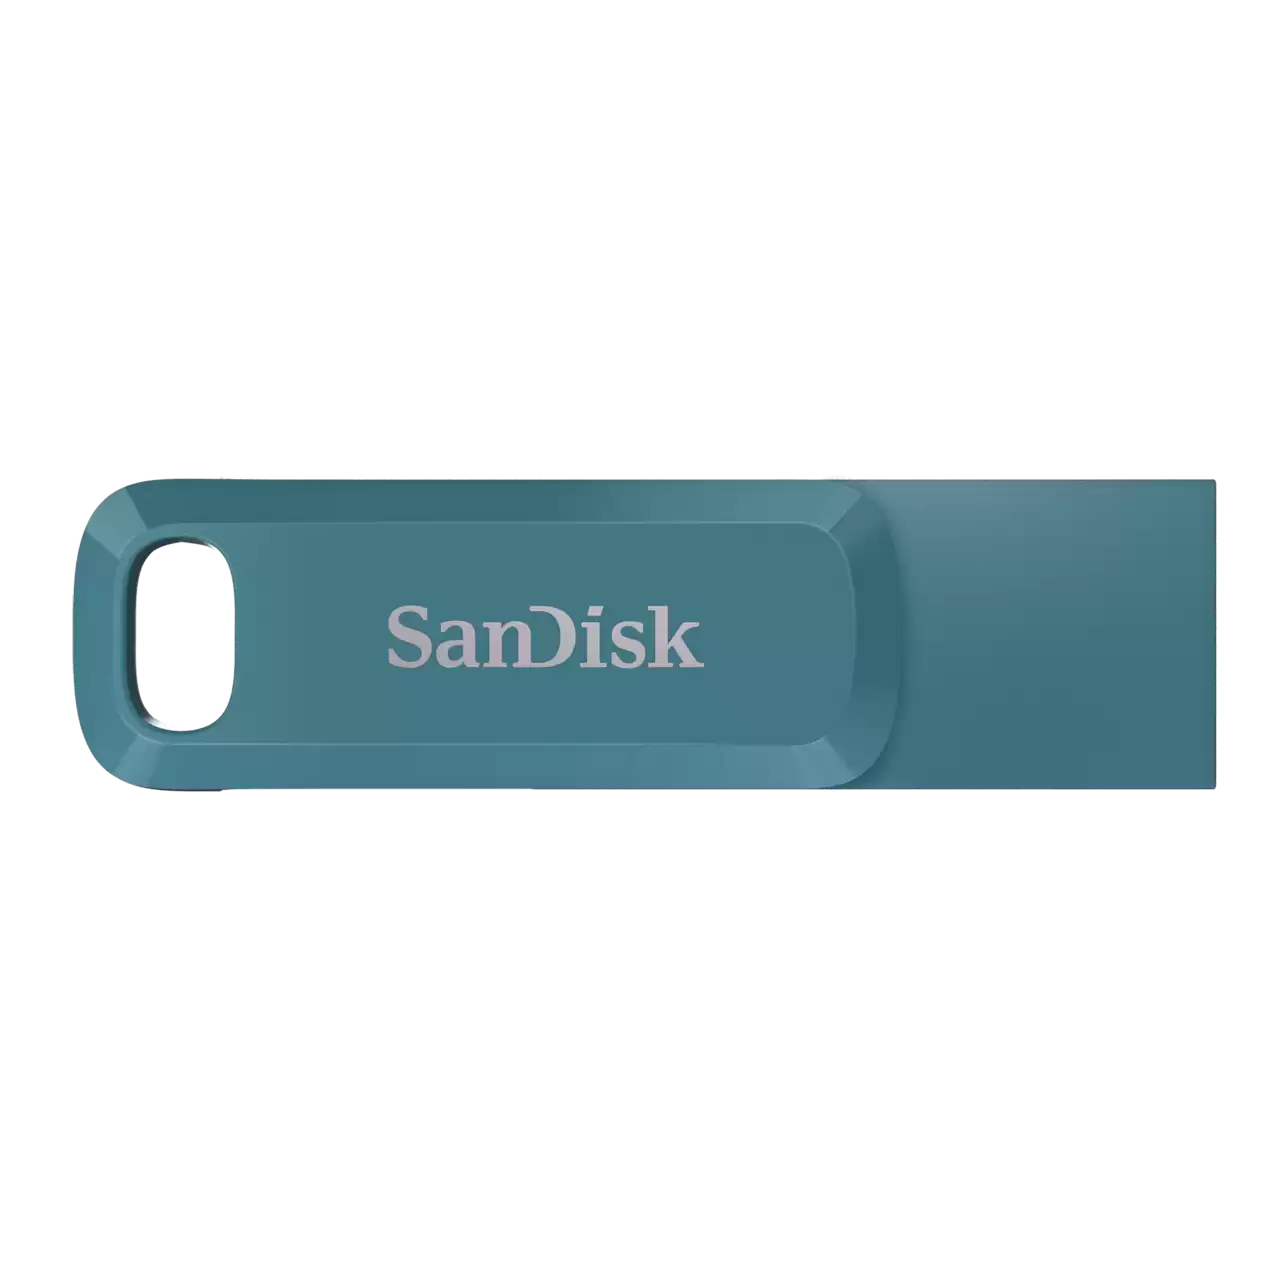 SanDisk 128GB Ultra Dual Drive Go USB Type-C Flash Drive, Black -  SDDDC3-128G-G46